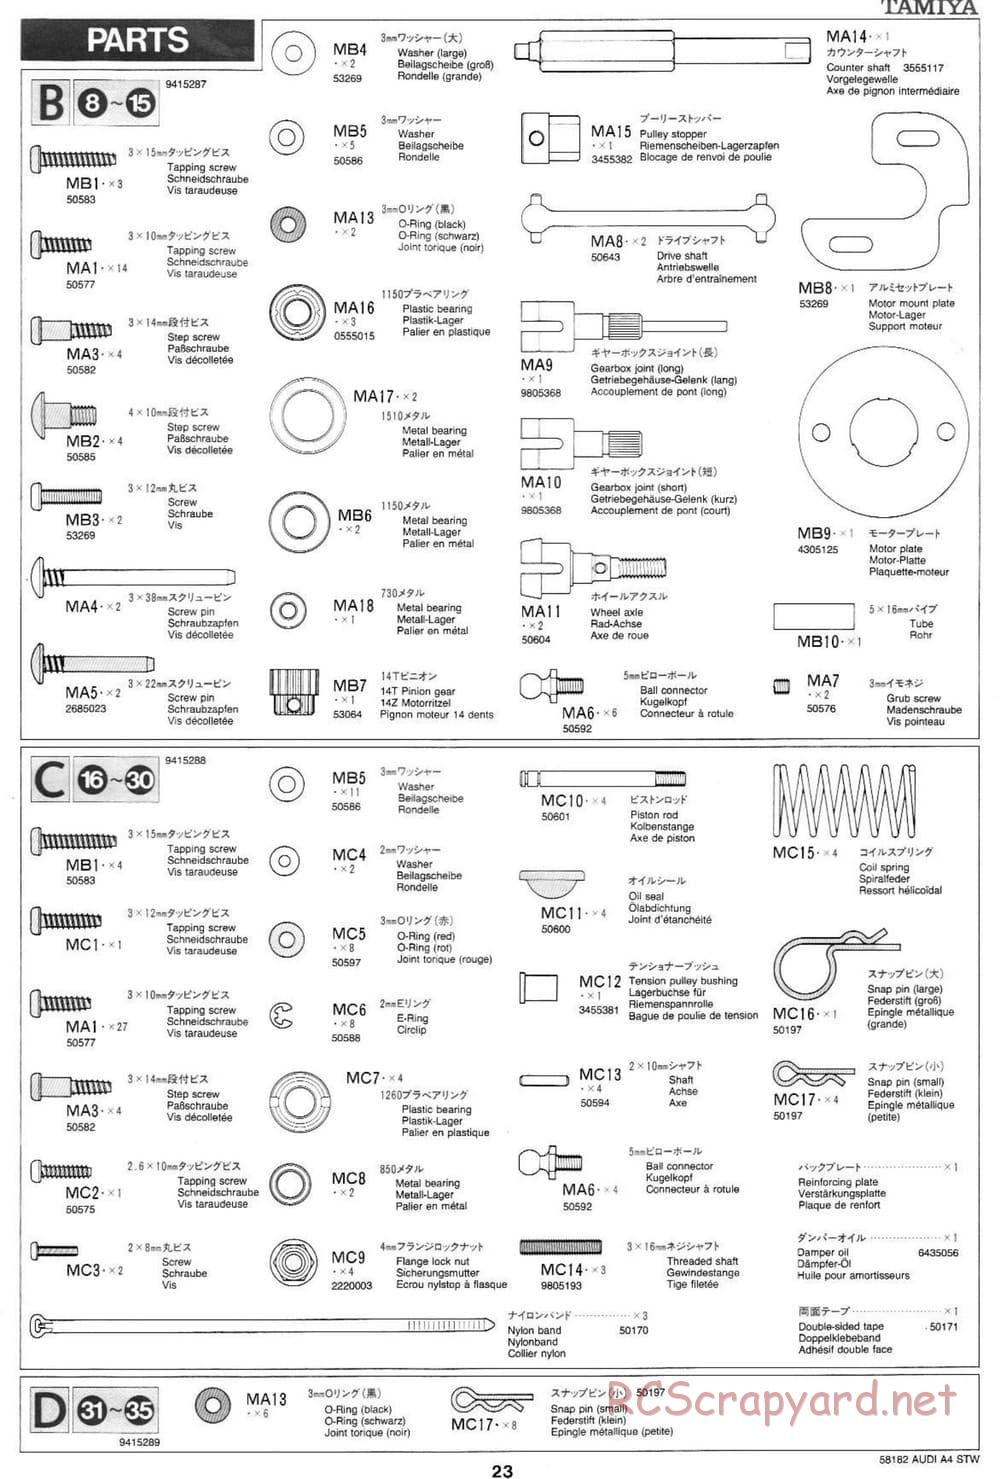 Tamiya - Audi A4 STW - TA-03F Chassis - Manual - Page 23